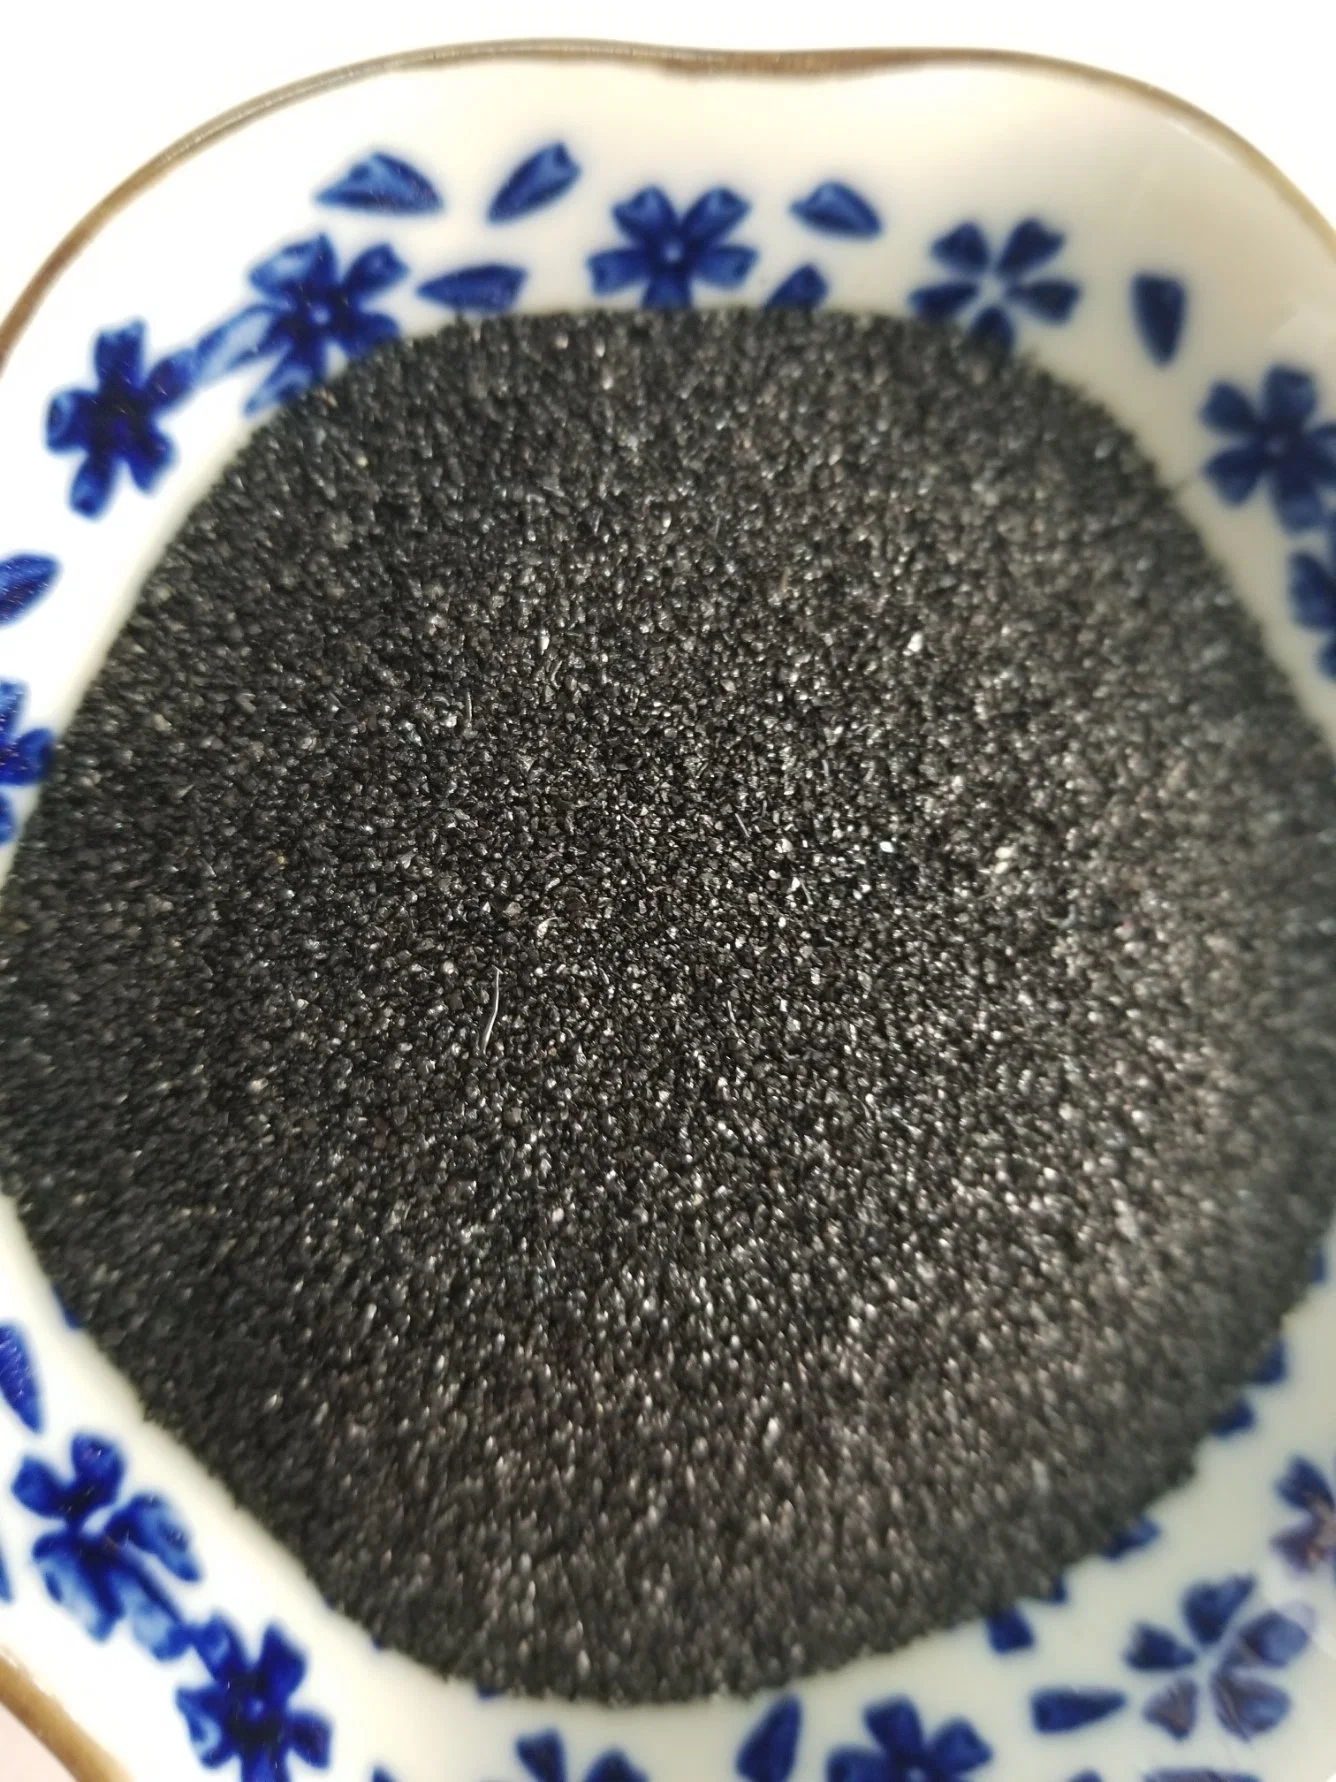 Ficha preta de esmeril fina areia Diamante de carboneto de silício abrasivos de decapagem/Polimento